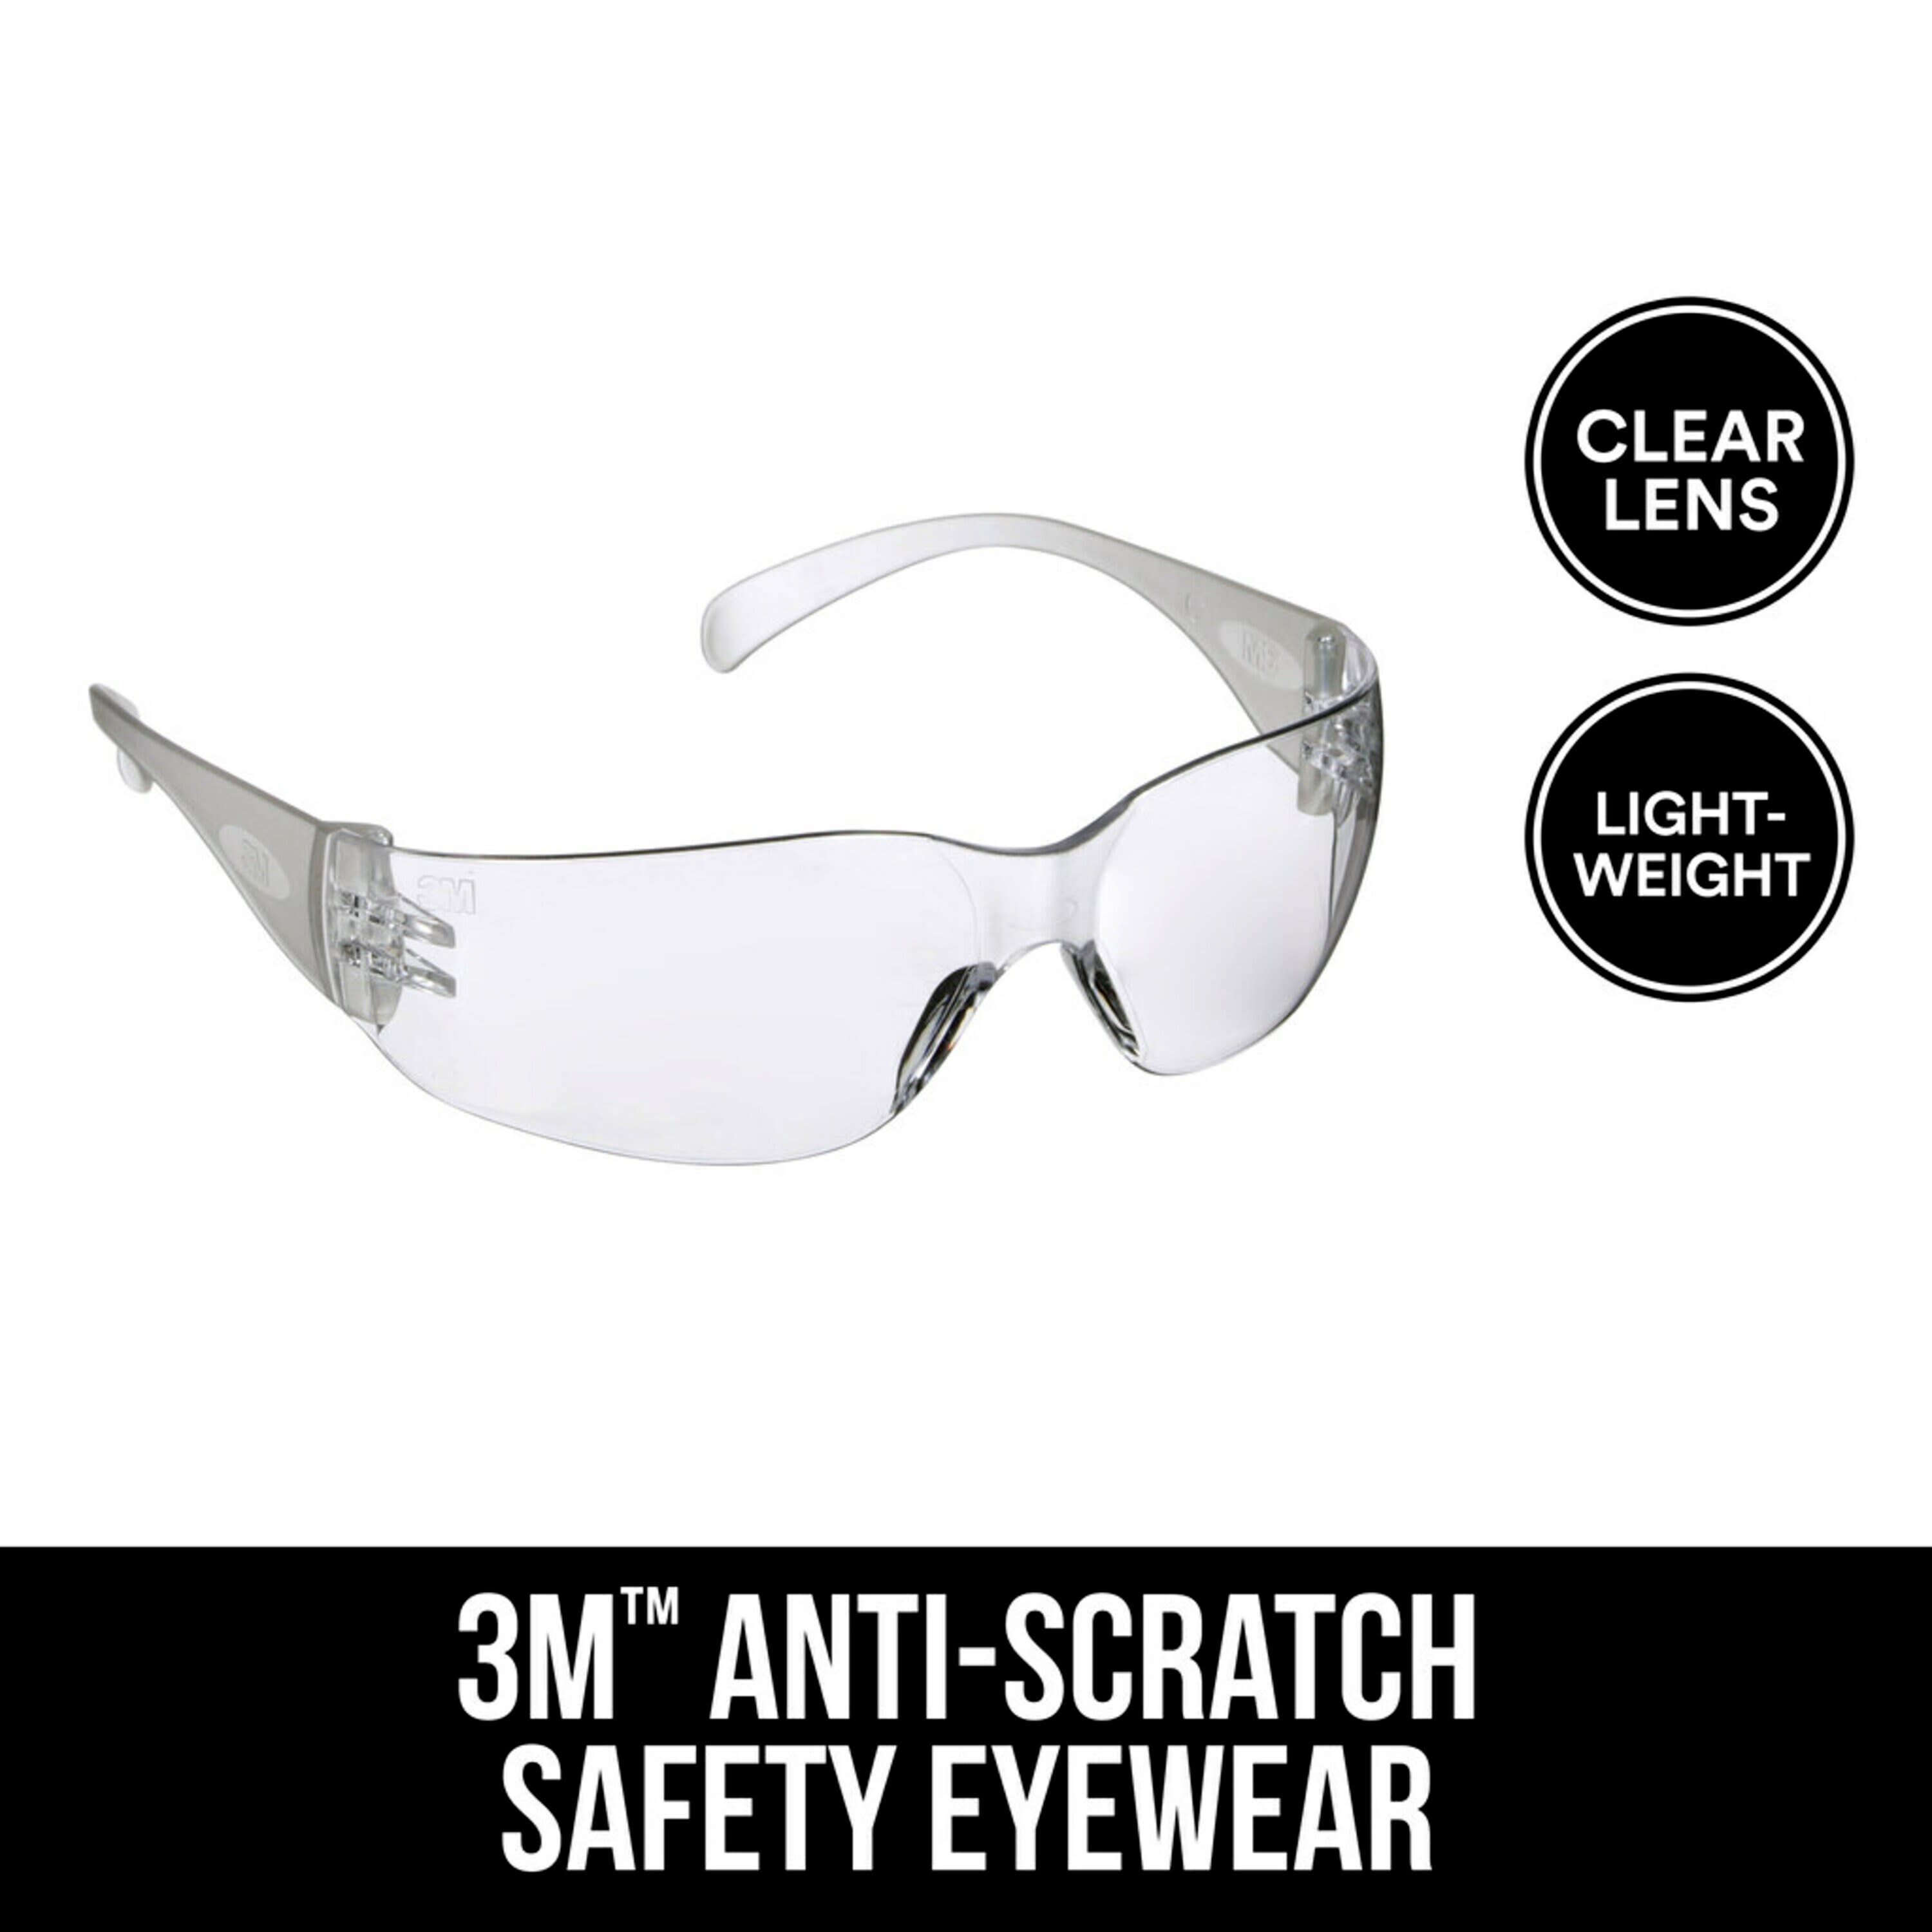 Oakley Eye Protection at 